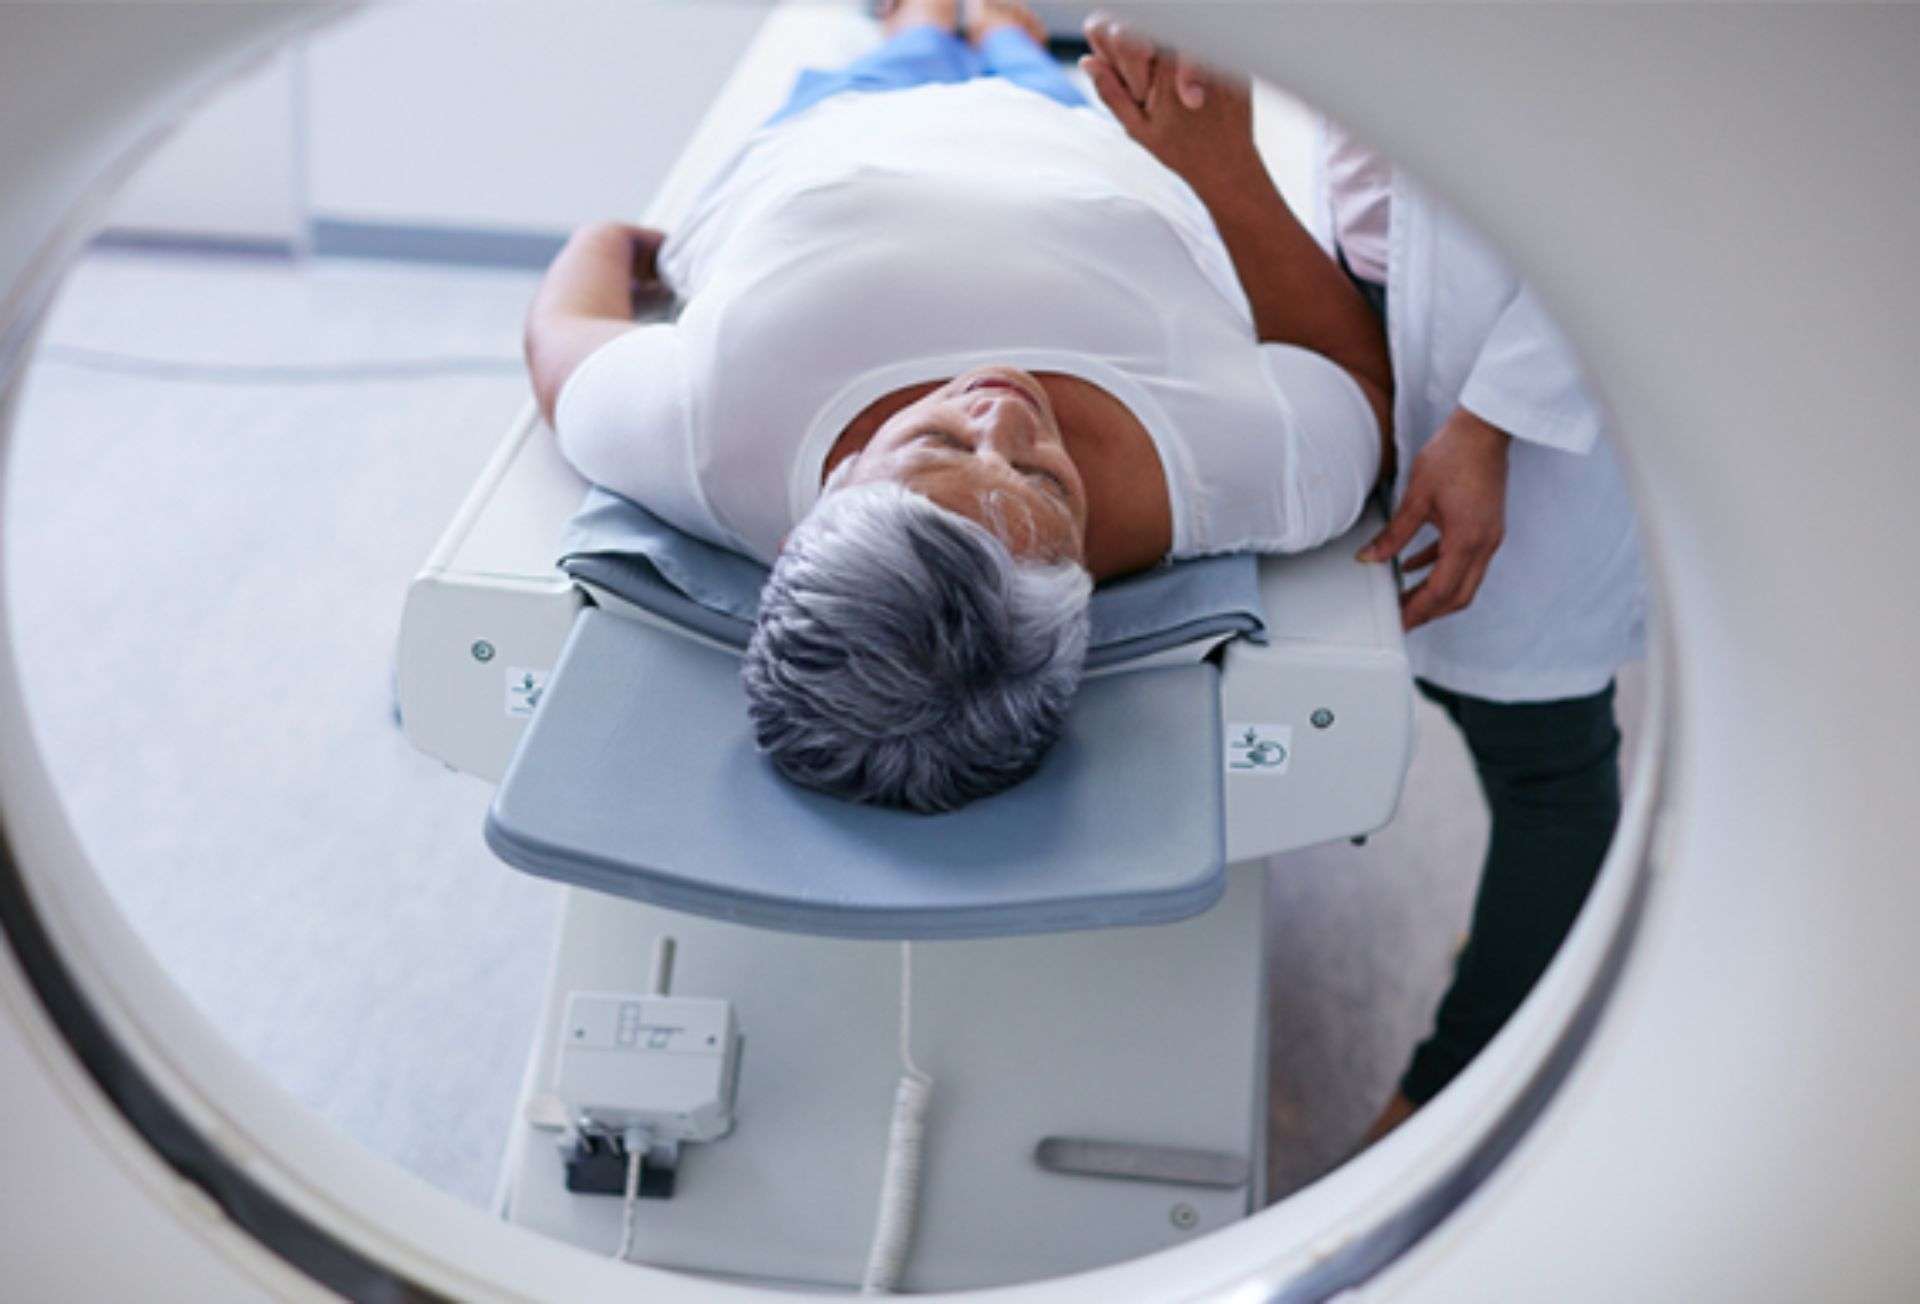 A person undergoing an MRI scan